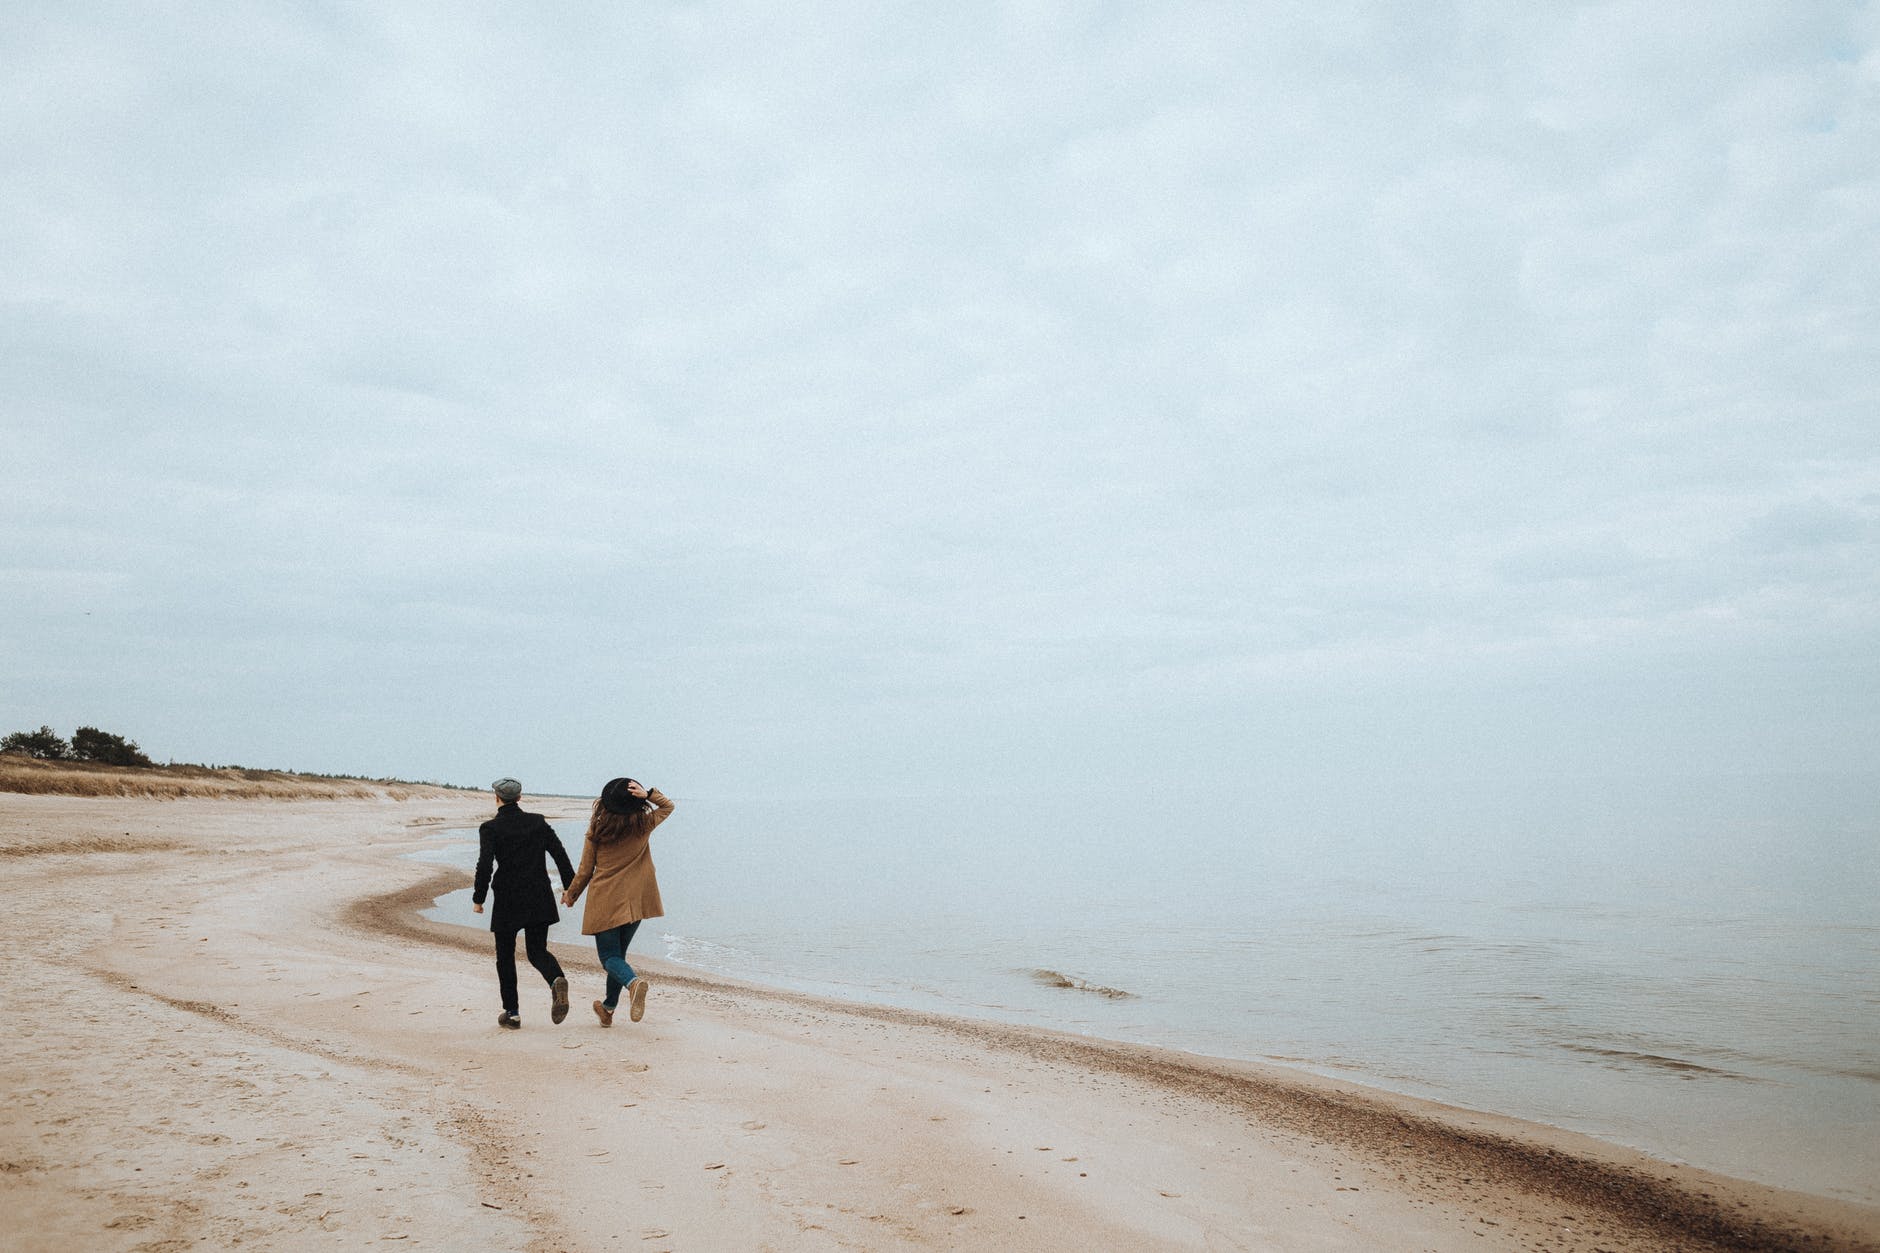 Posljednji zagrljaj

a women and a man walking on beach